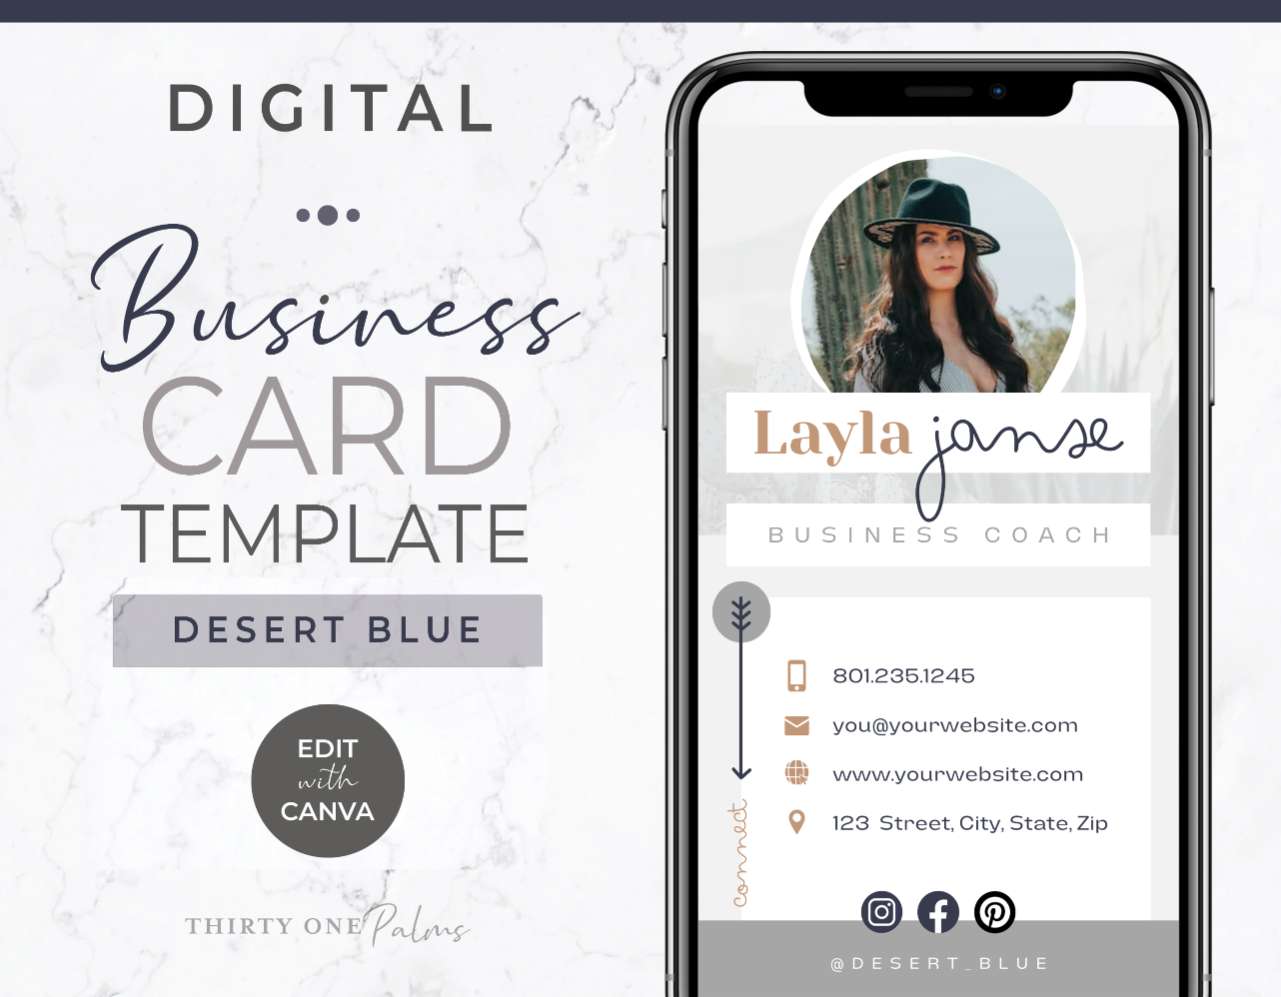 Digital Business Card Template for Canva - Desert Blue